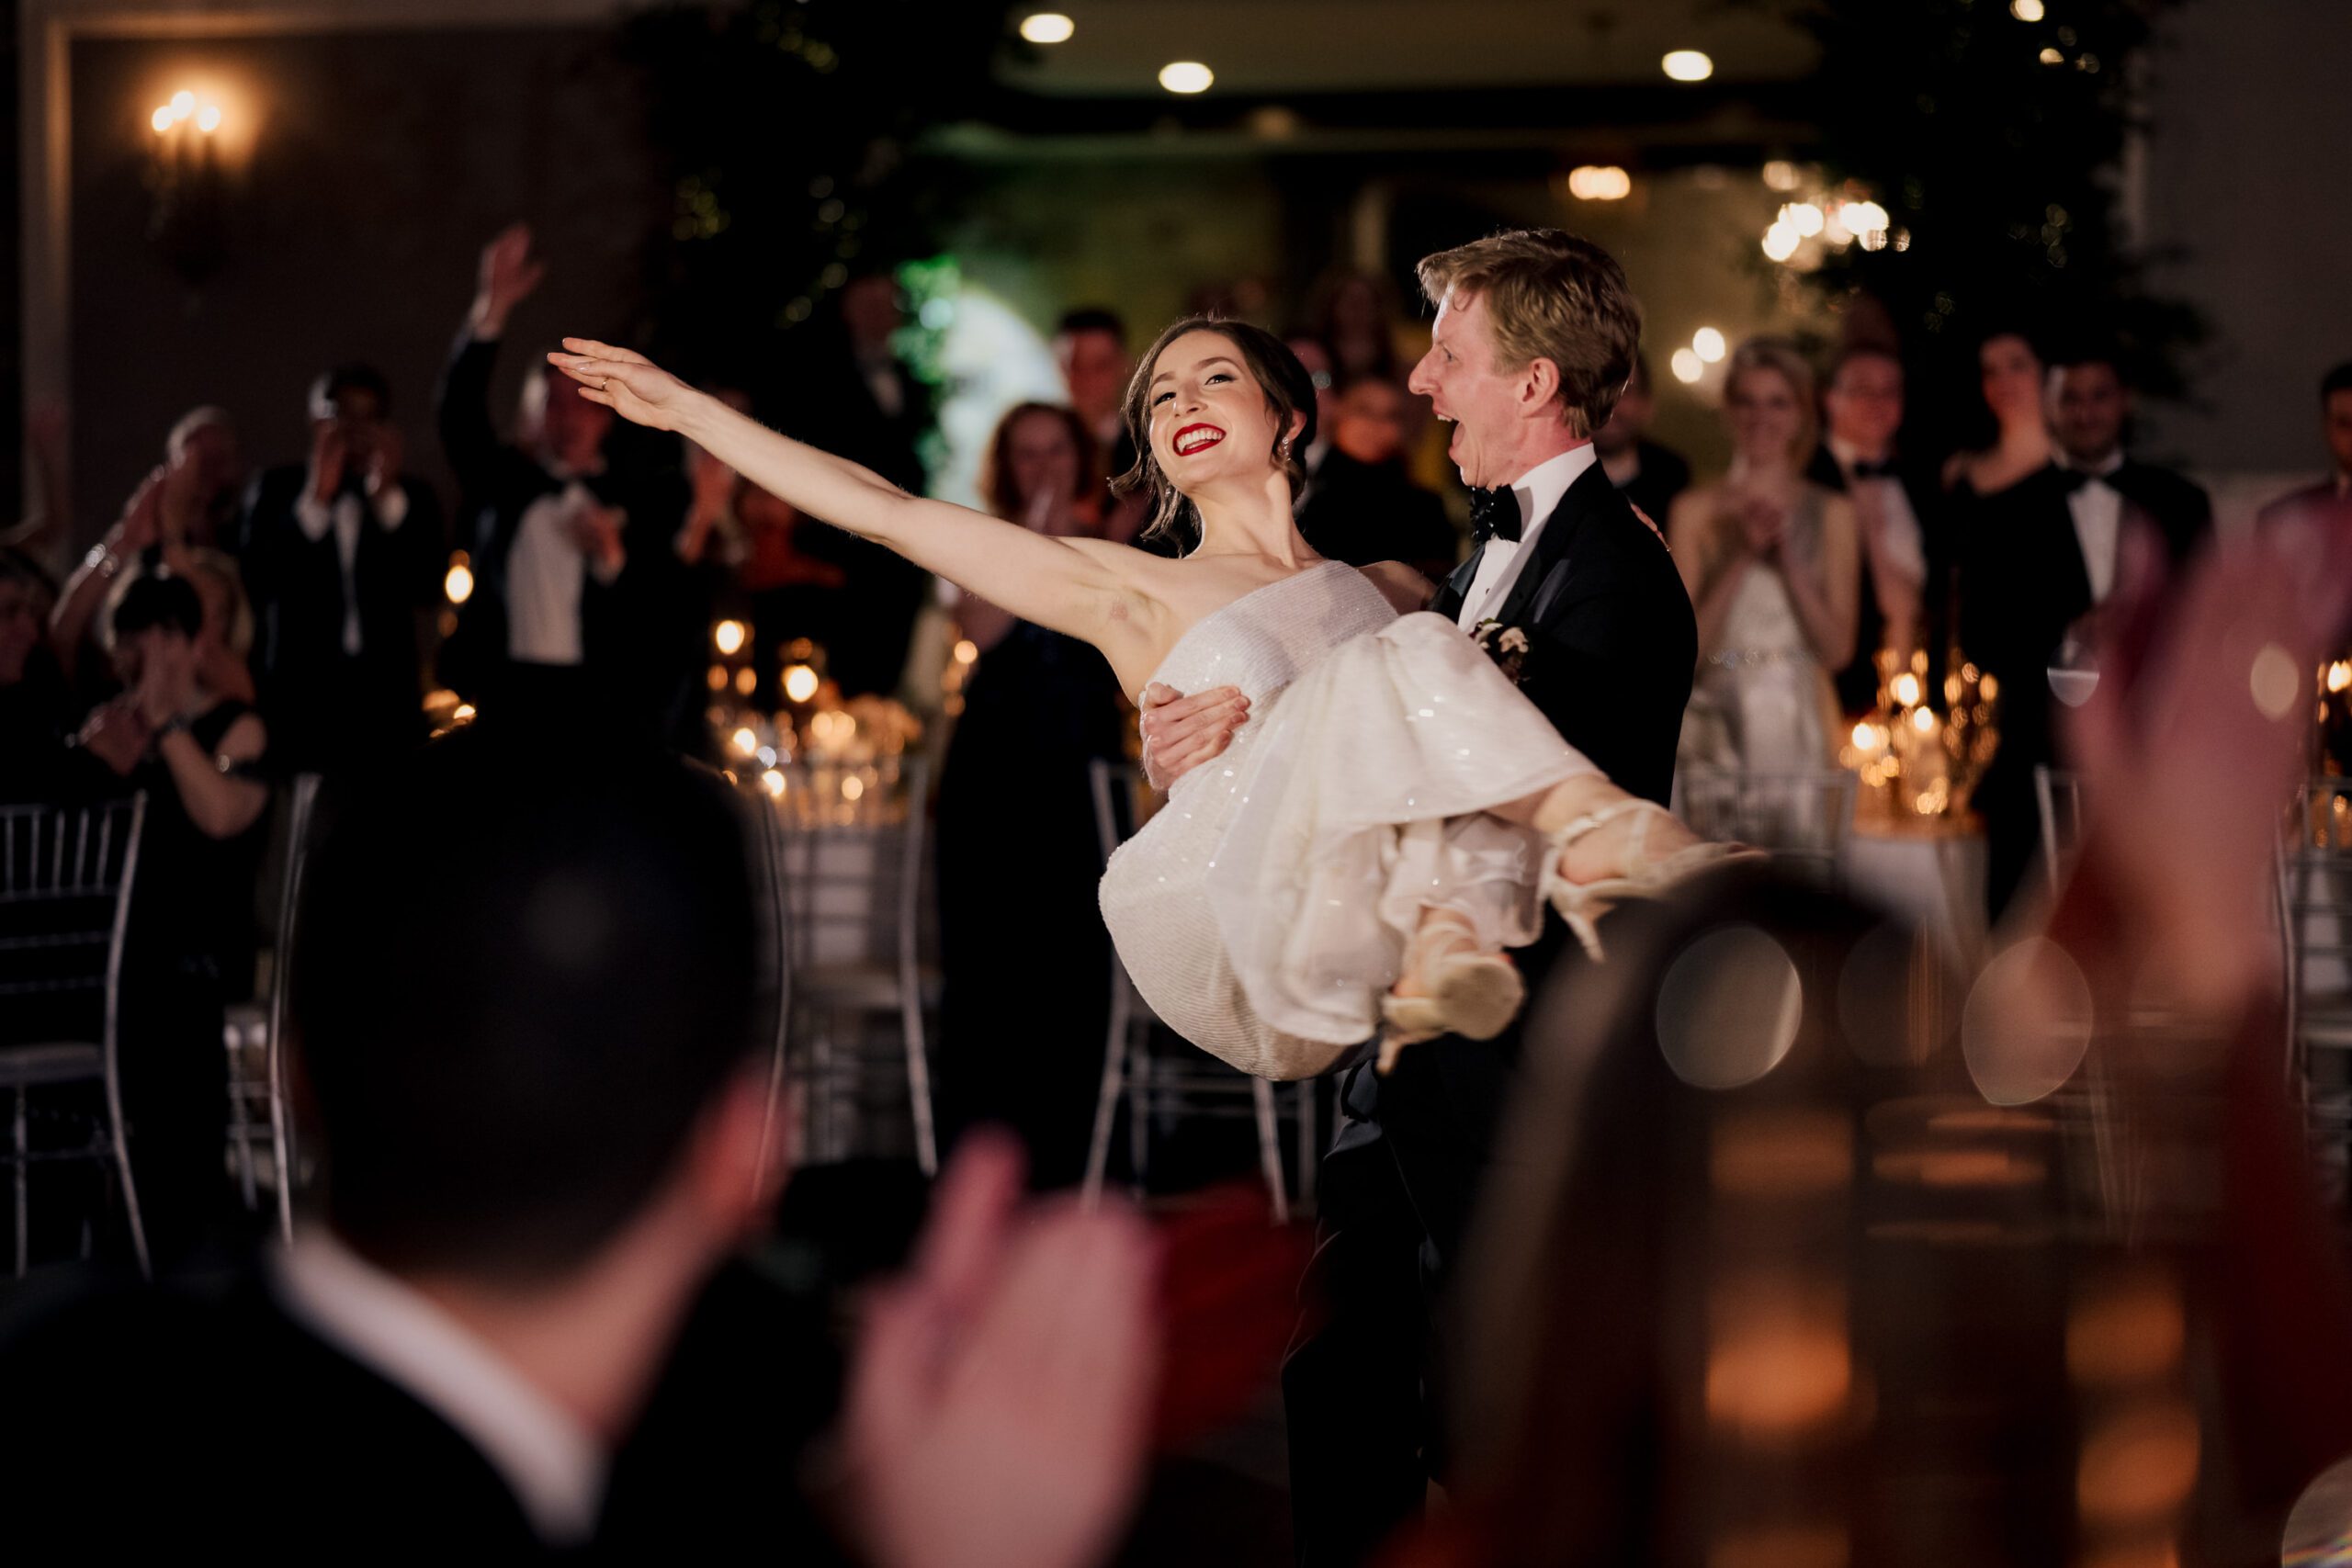 Bride and groom share a joyful laugh at their NJ wedding reception - candid wedding photography